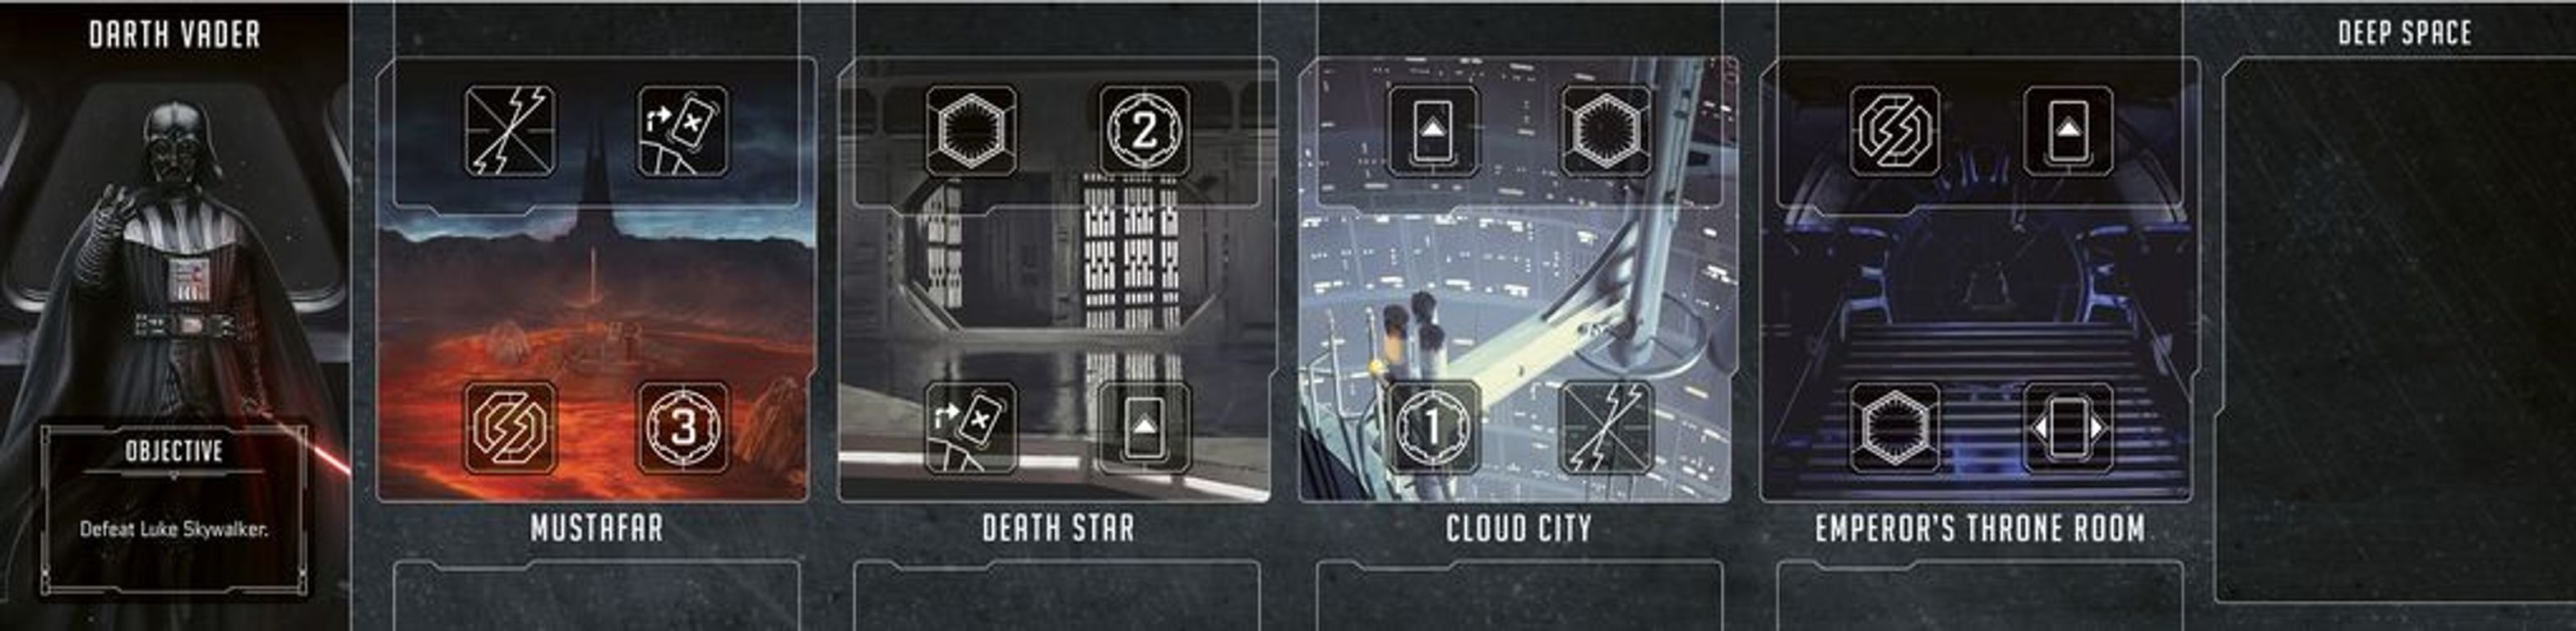 Star Wars Villainous: Power of the Dark Side cards